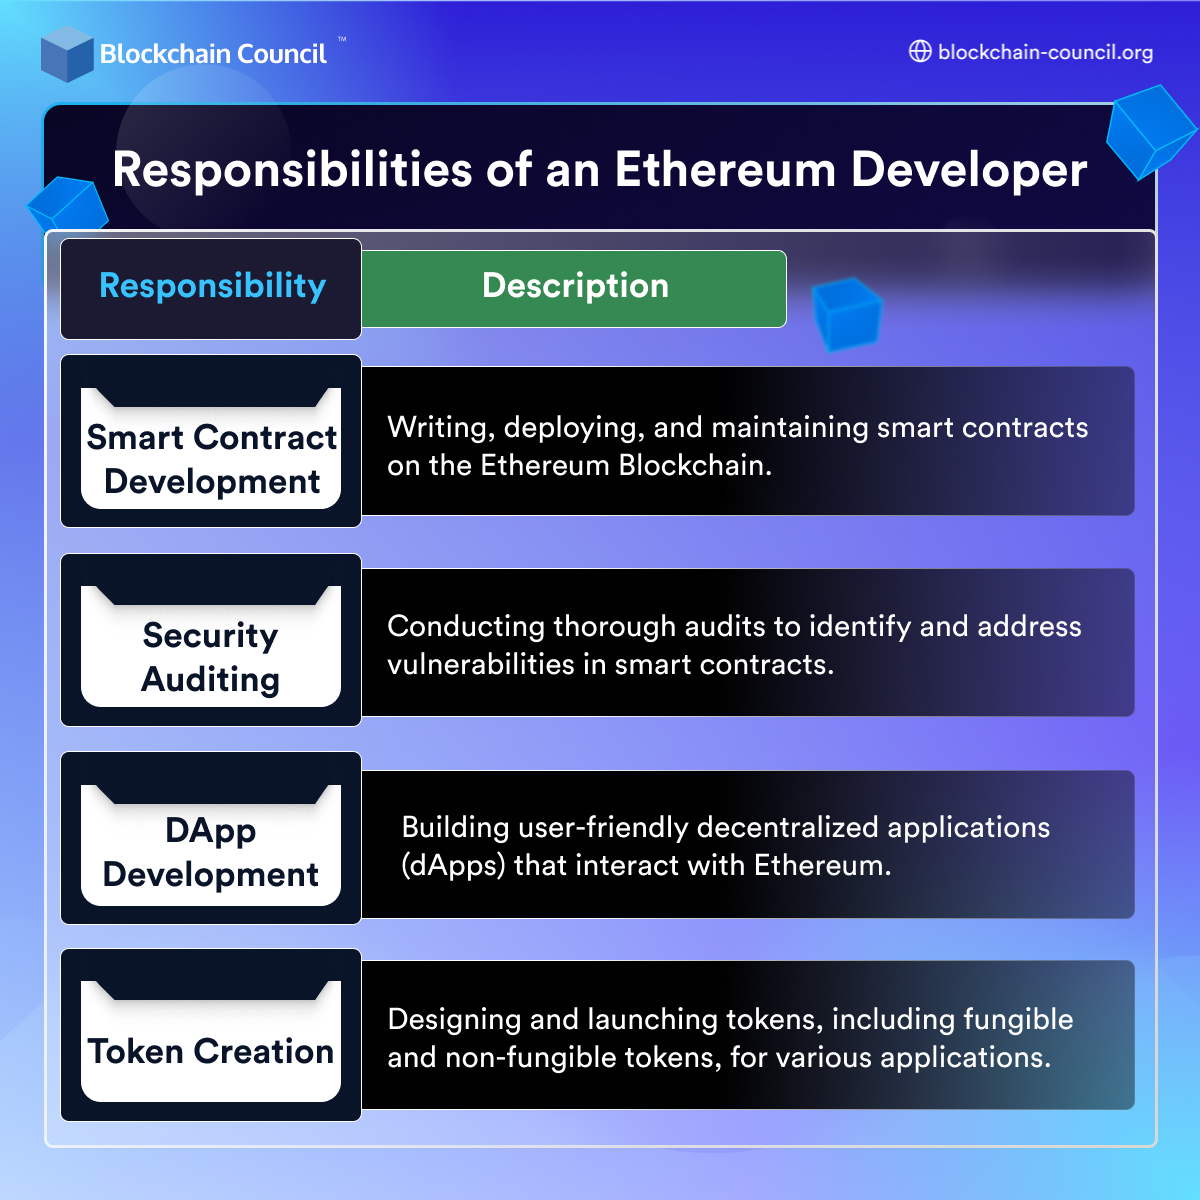 Responsibilities of an Ethereum Developer